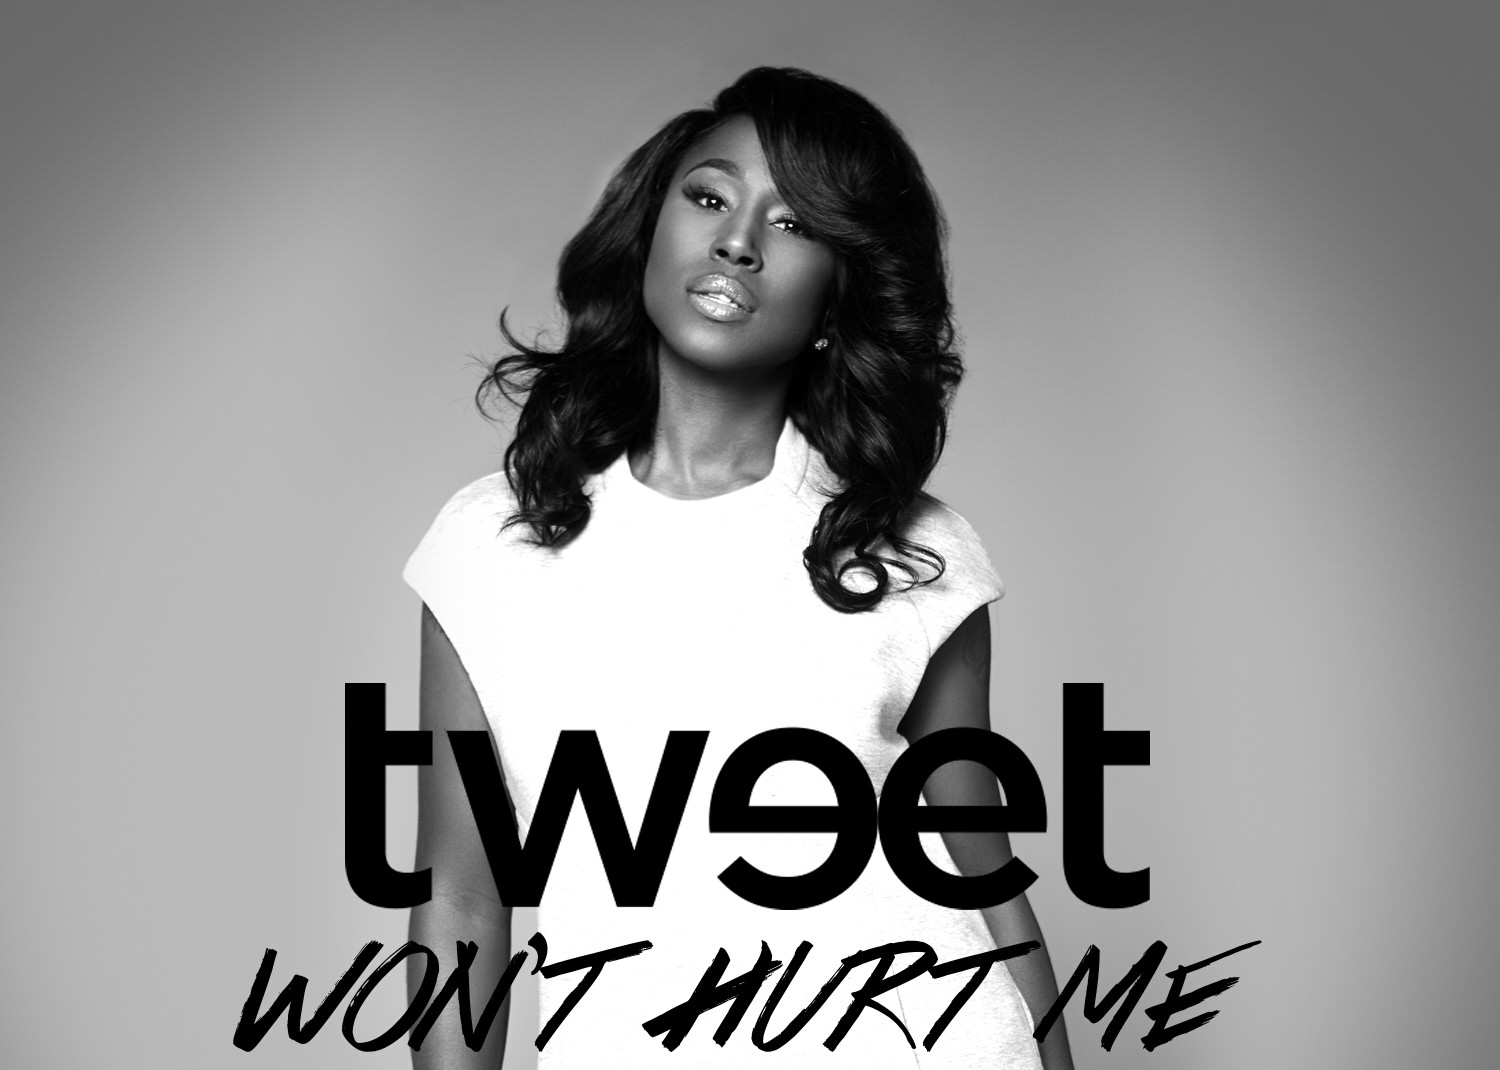 Singer Tweet to Release New Single "Won't Hurt Me" Next Week from Upcoming Album "Charlene"